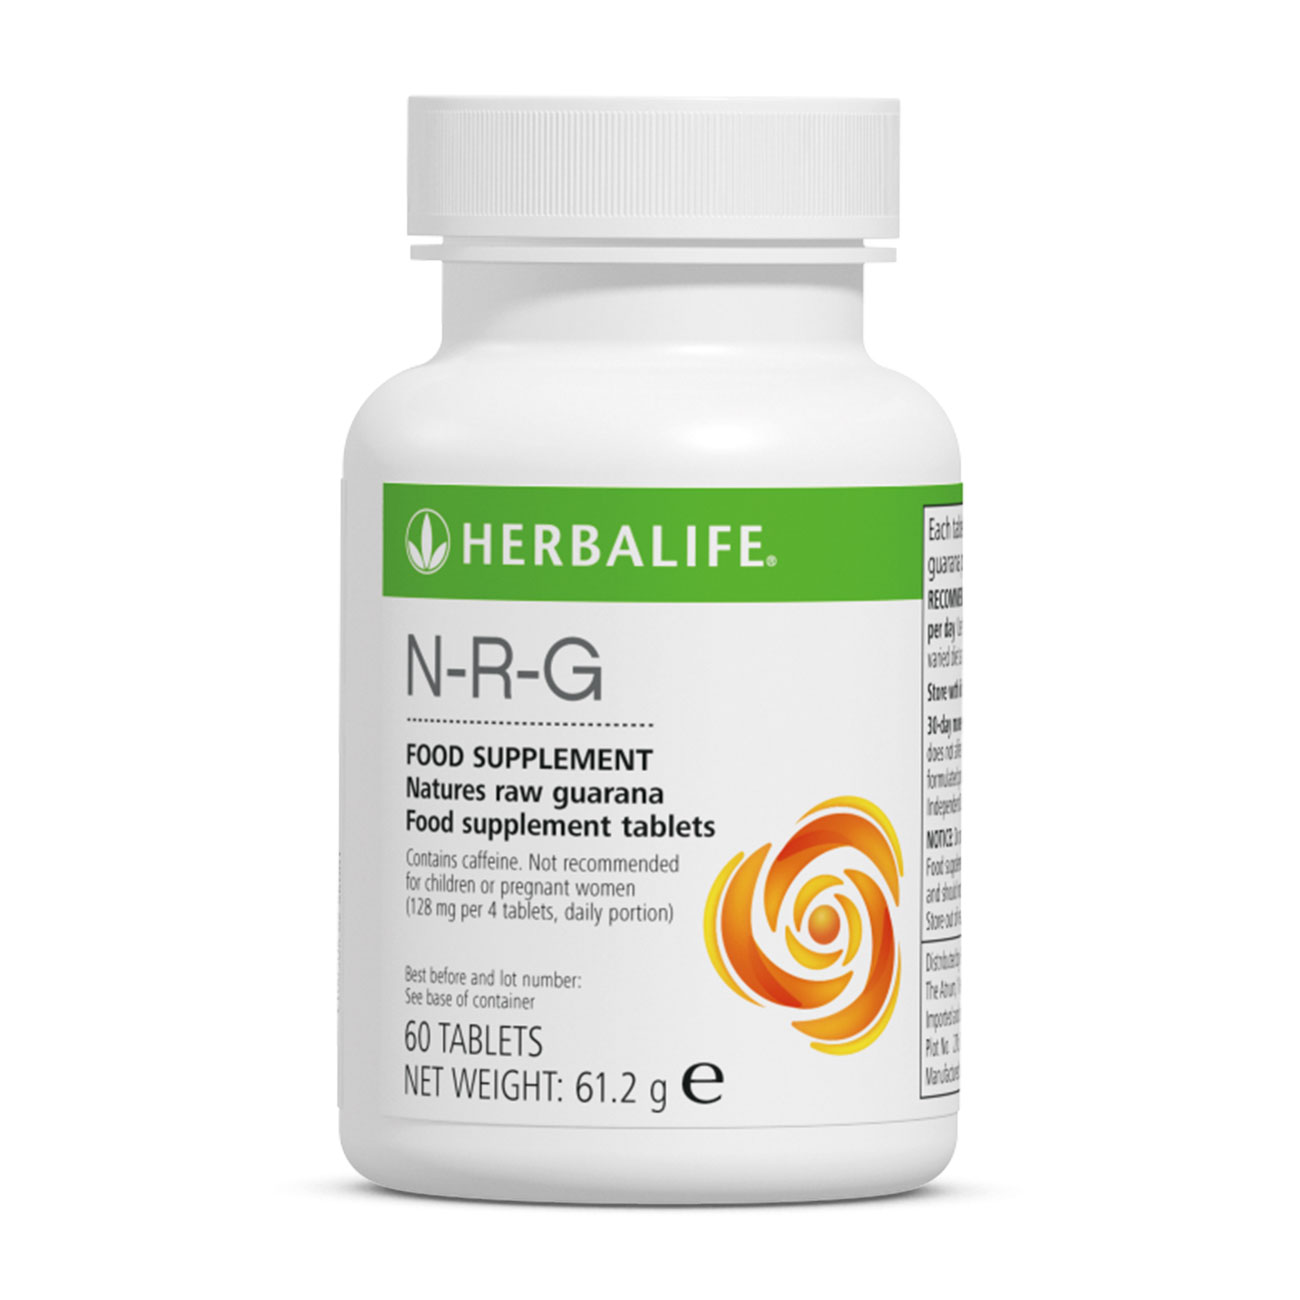 N-R-G Nature's Raw Guarana Caffeine Supplement product shot